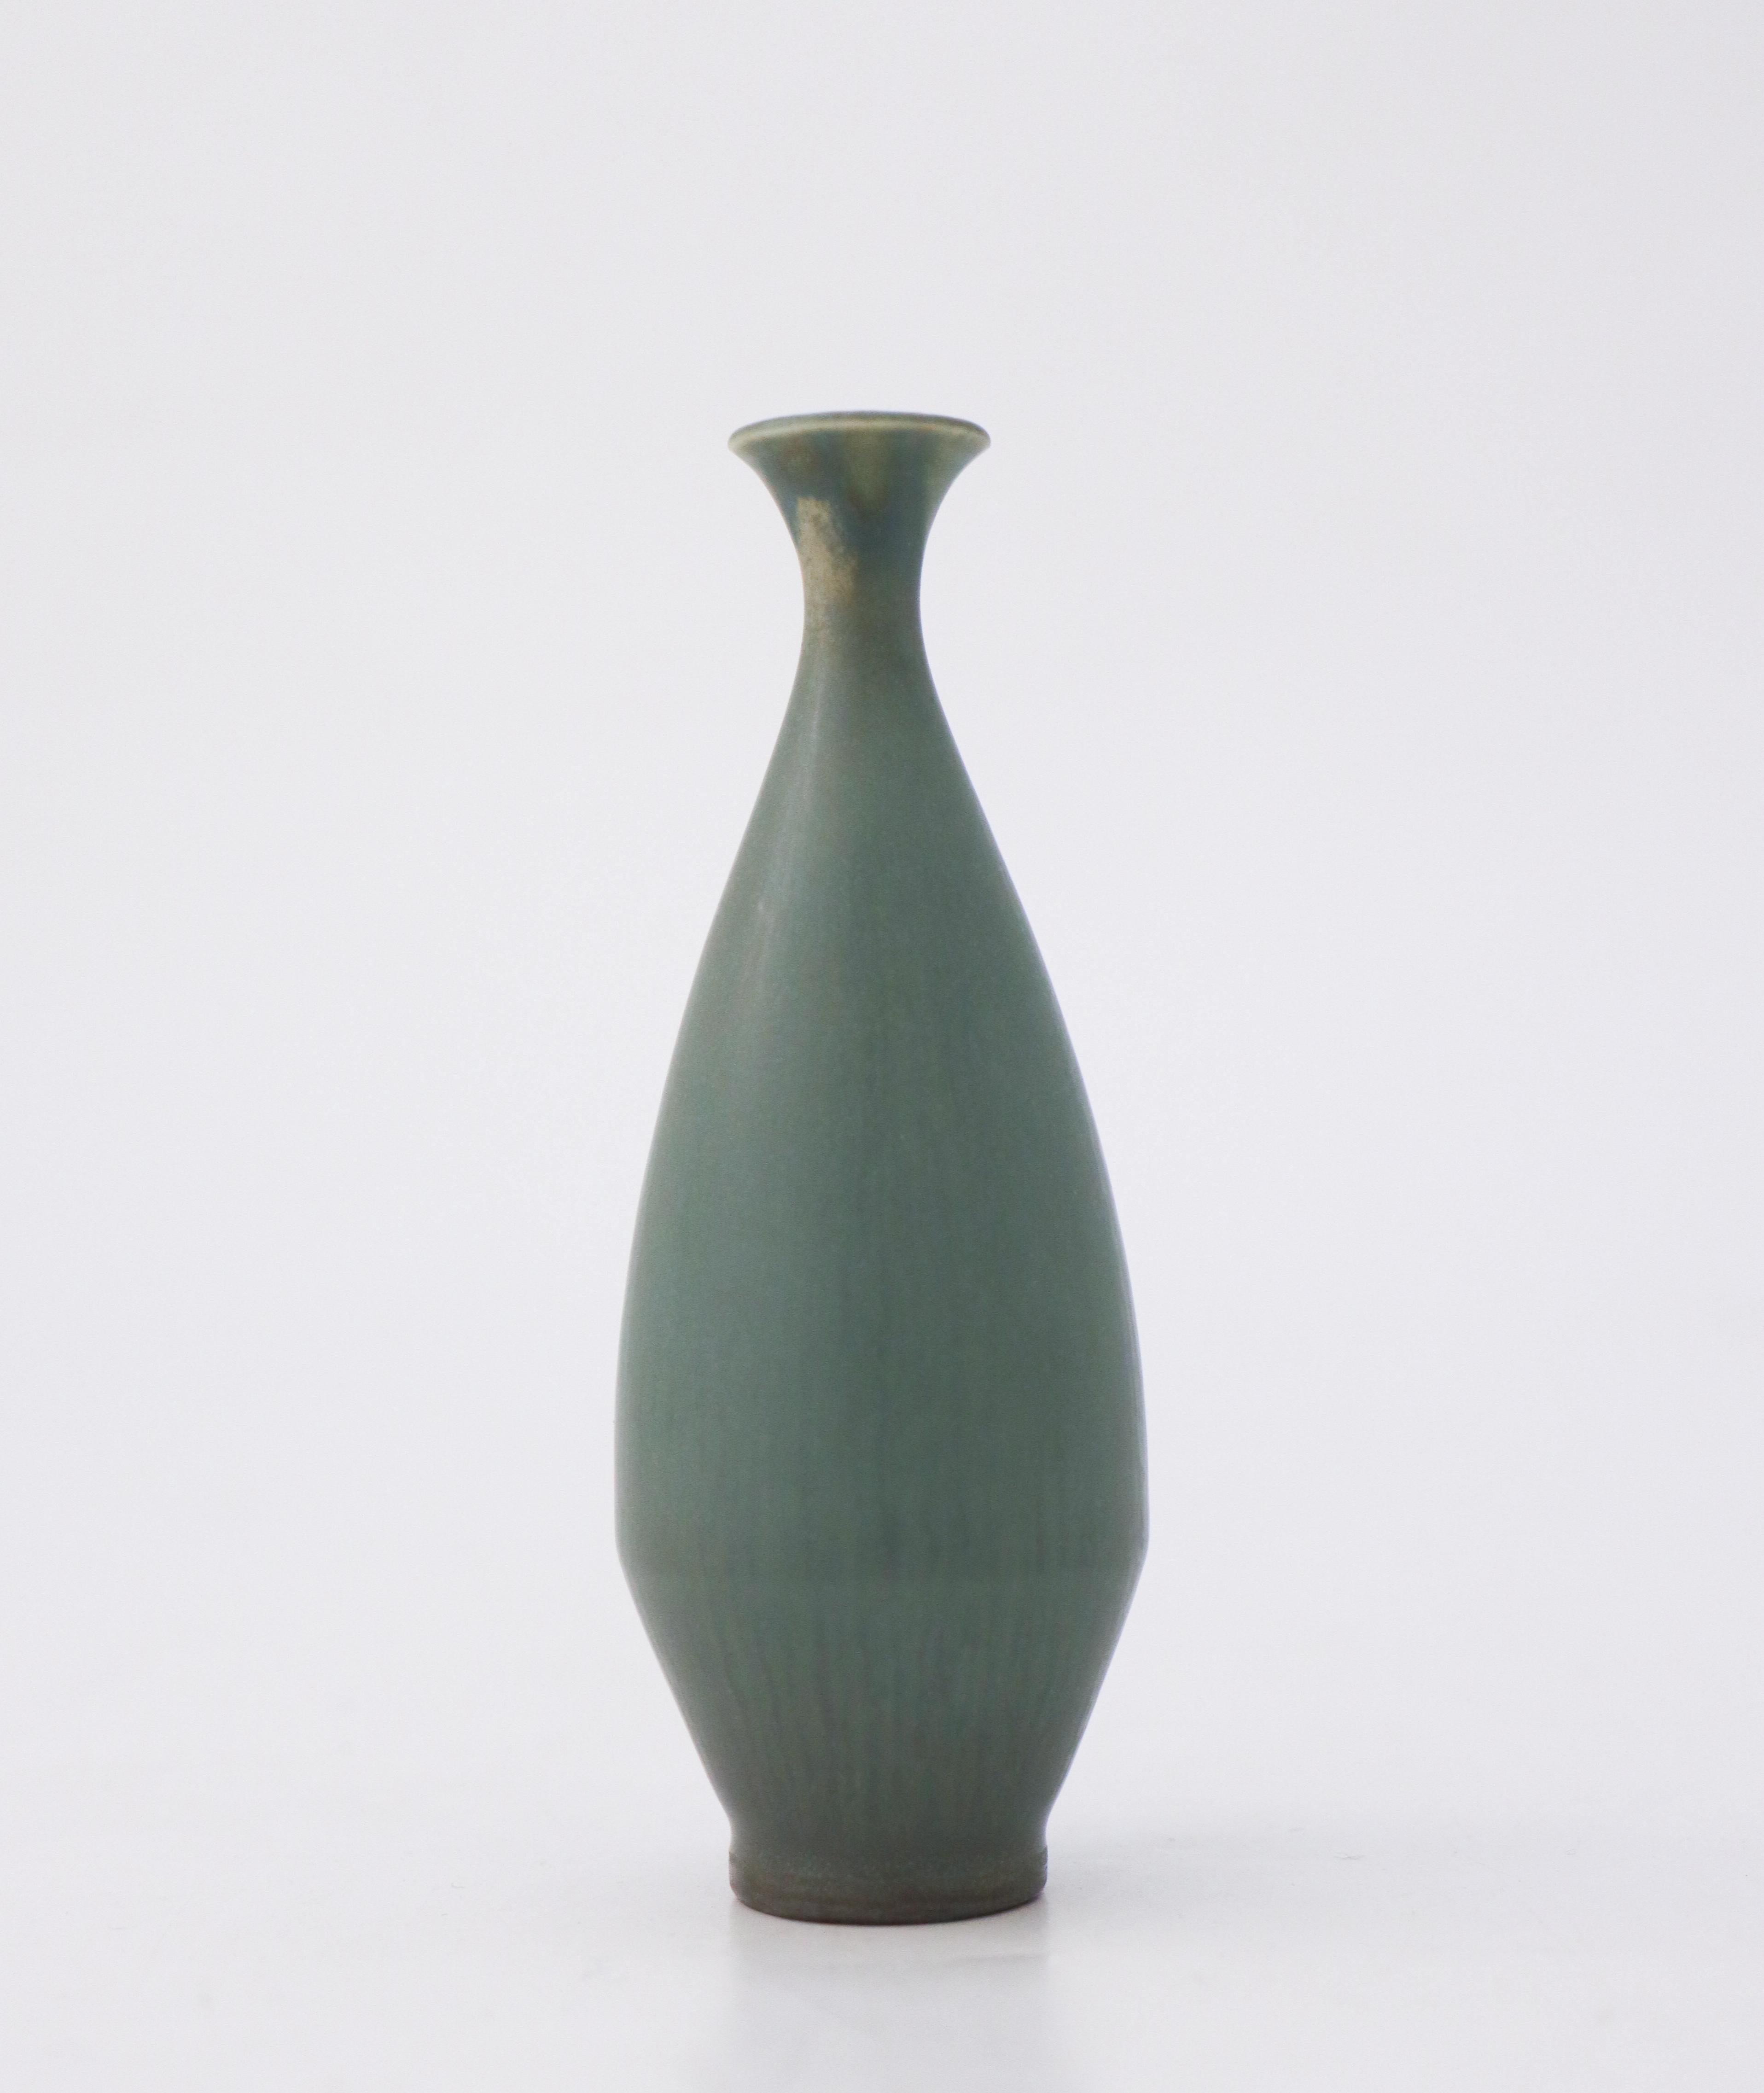 Suédois Vase en céramique vert/gris Berndt Friberg Gustavsberg, Vintage du milieu du siècle dernier - 1967 en vente